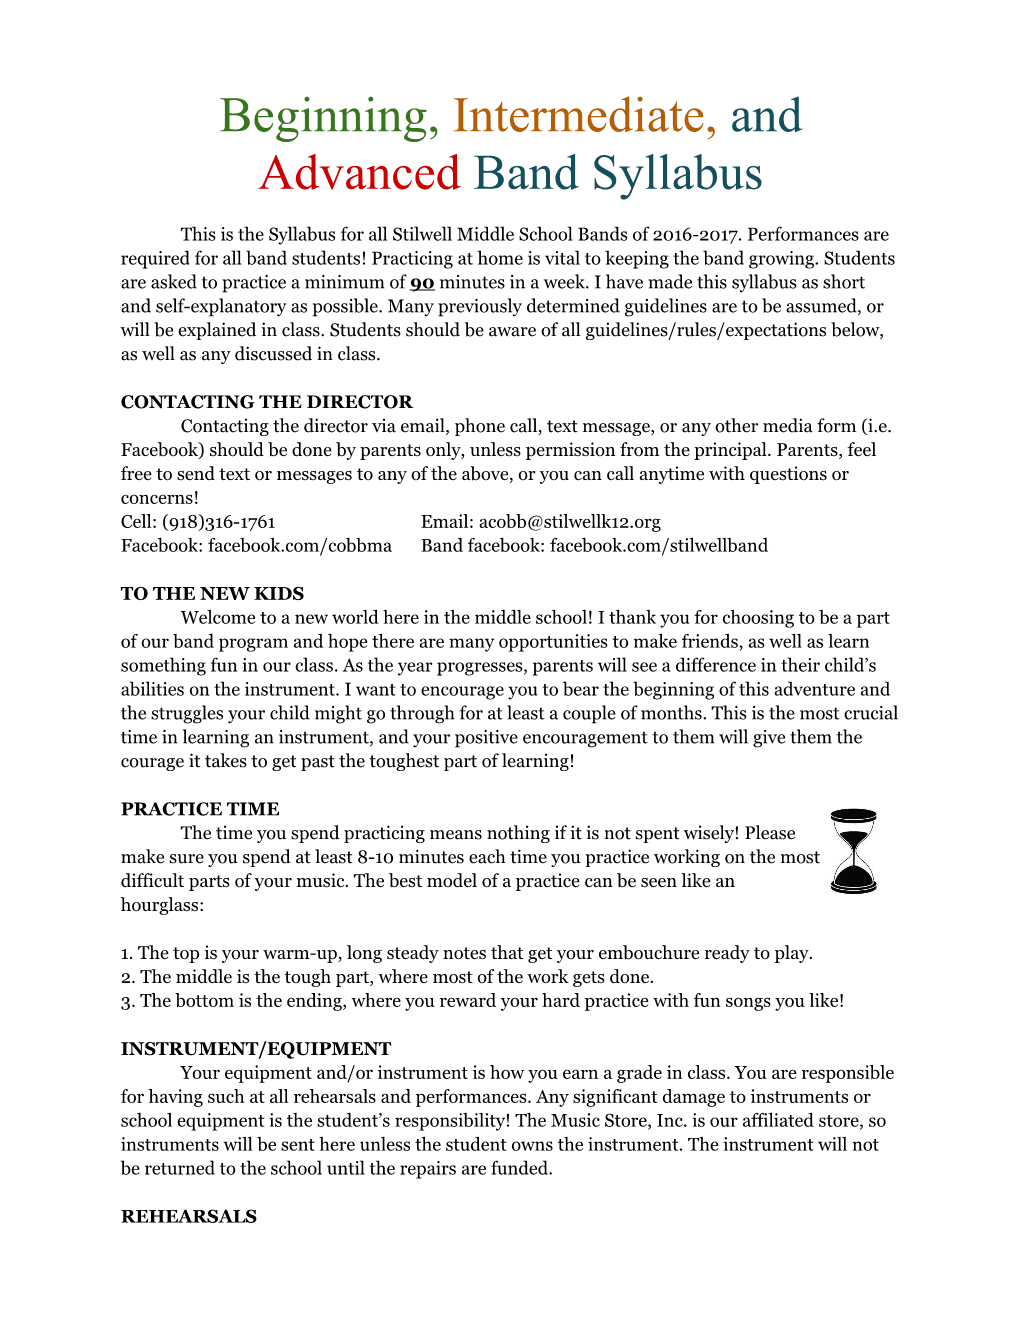 Beginning, Intermediate, and Advanced Band Syllabus